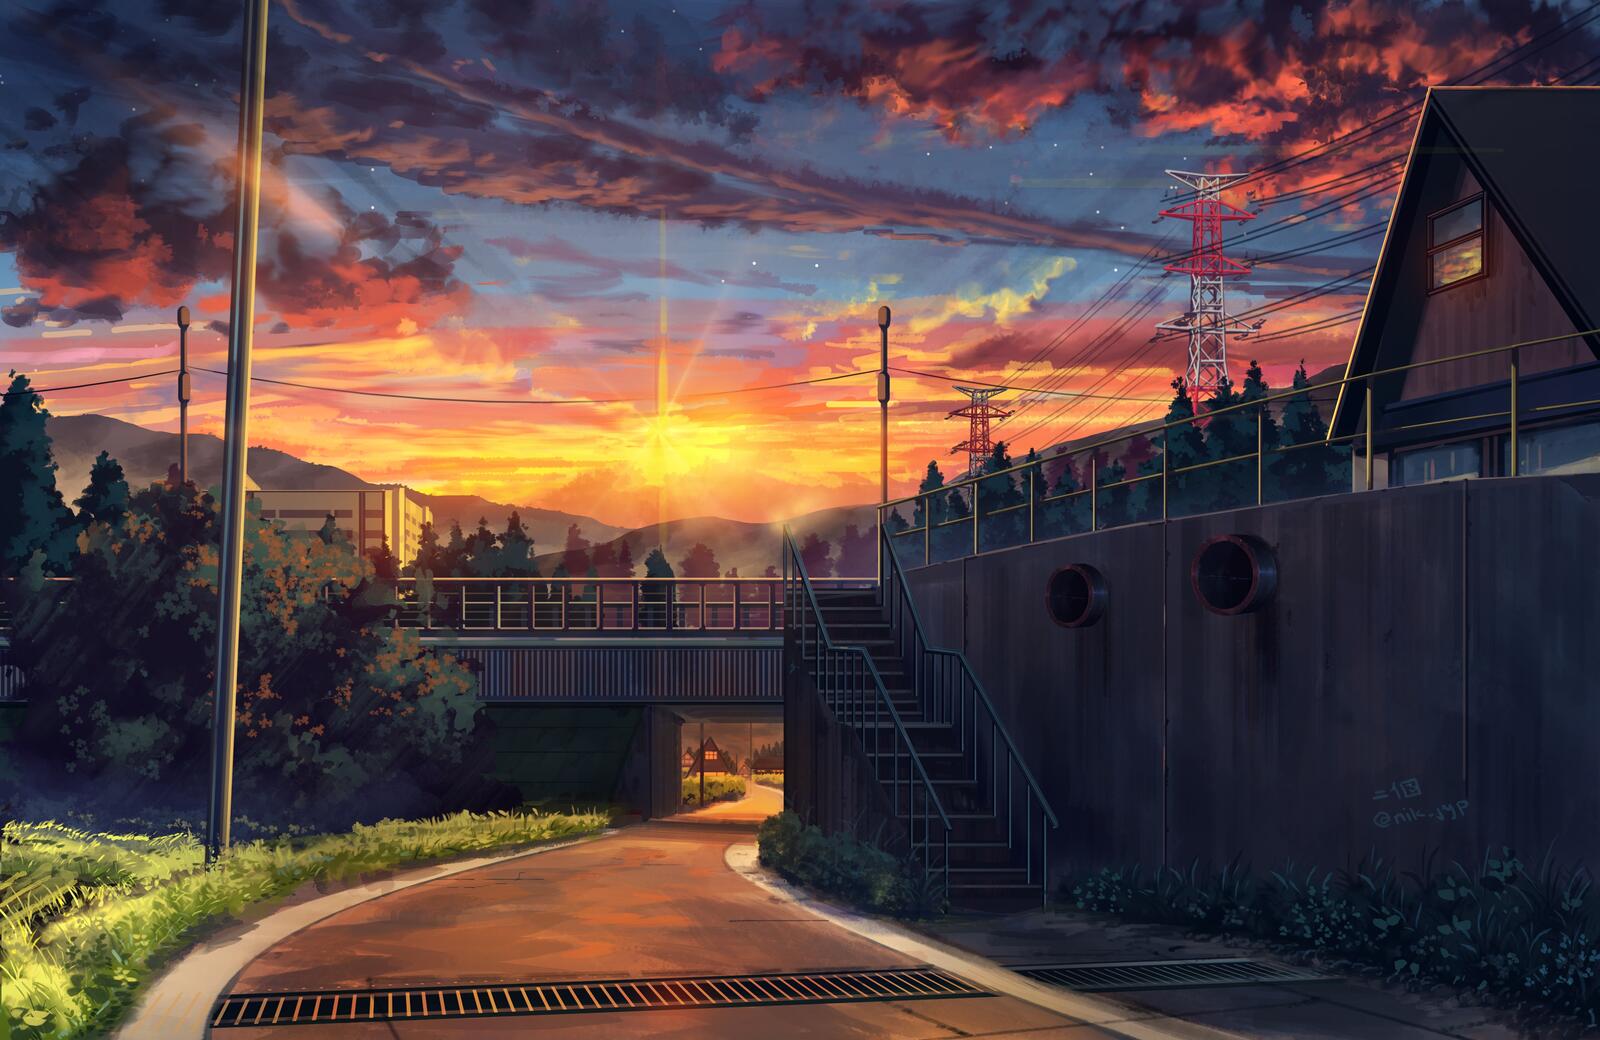 Wallpapers wallpaper anime sunset landscape picturesque on the desktop